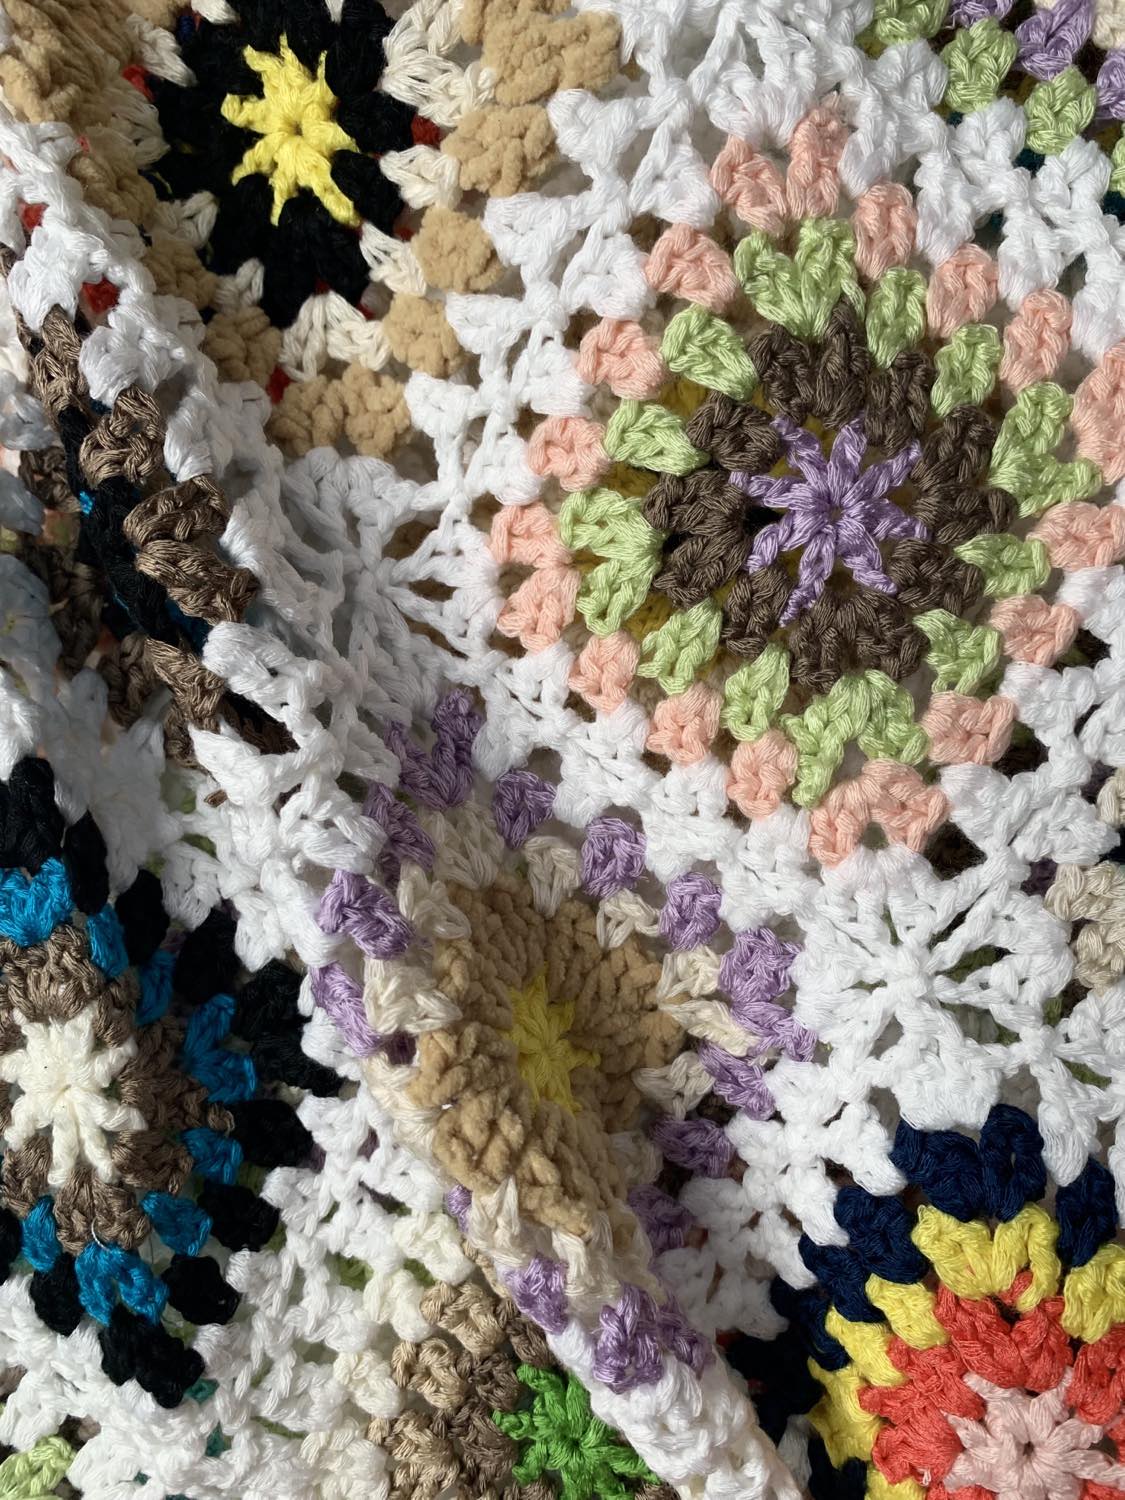 Colourful Crochet Crop Top